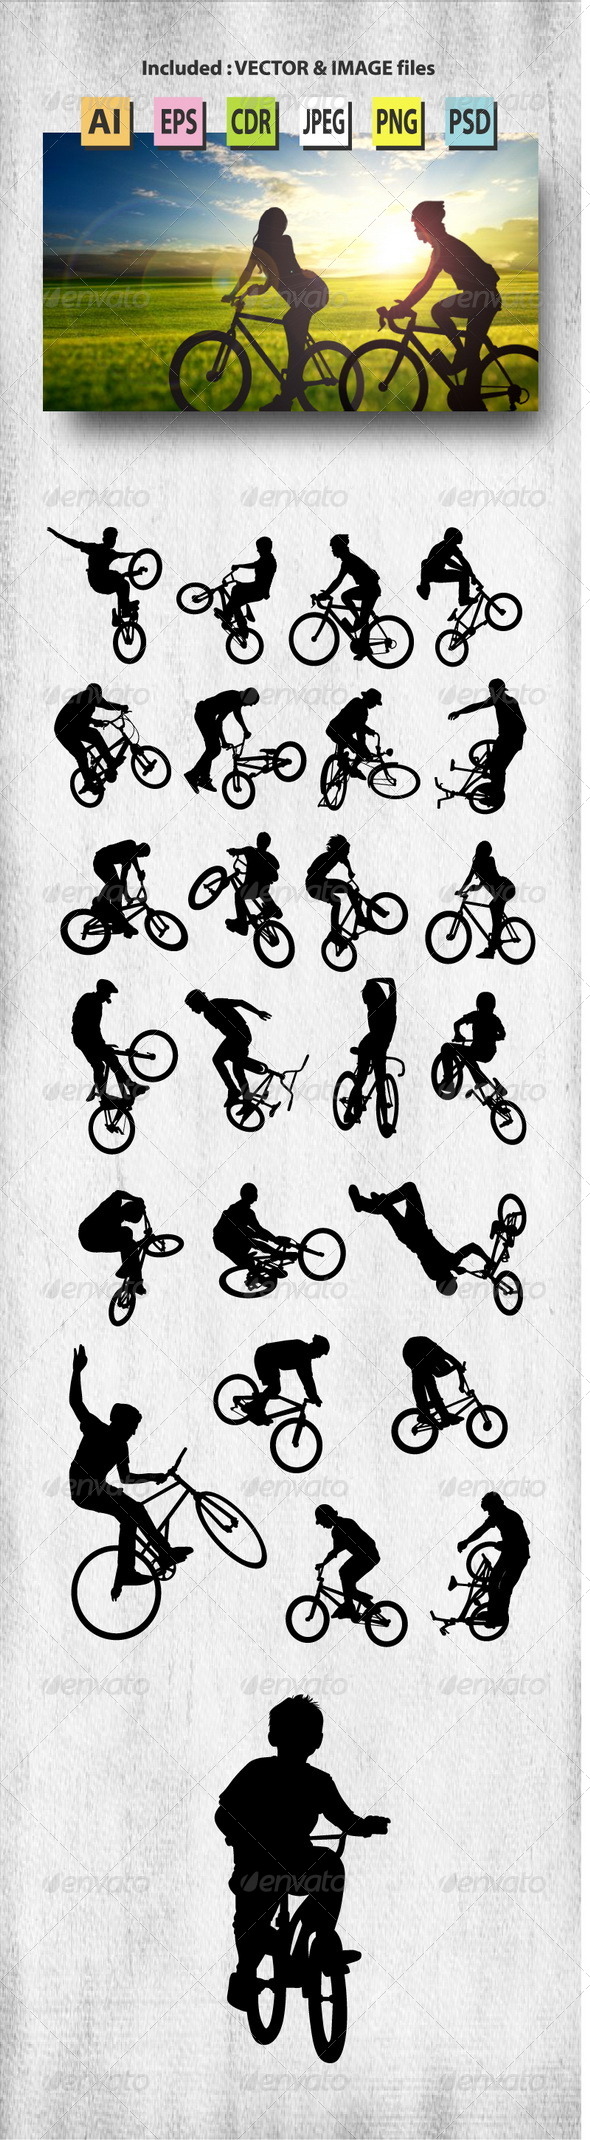 Bike Rider Silhouettes